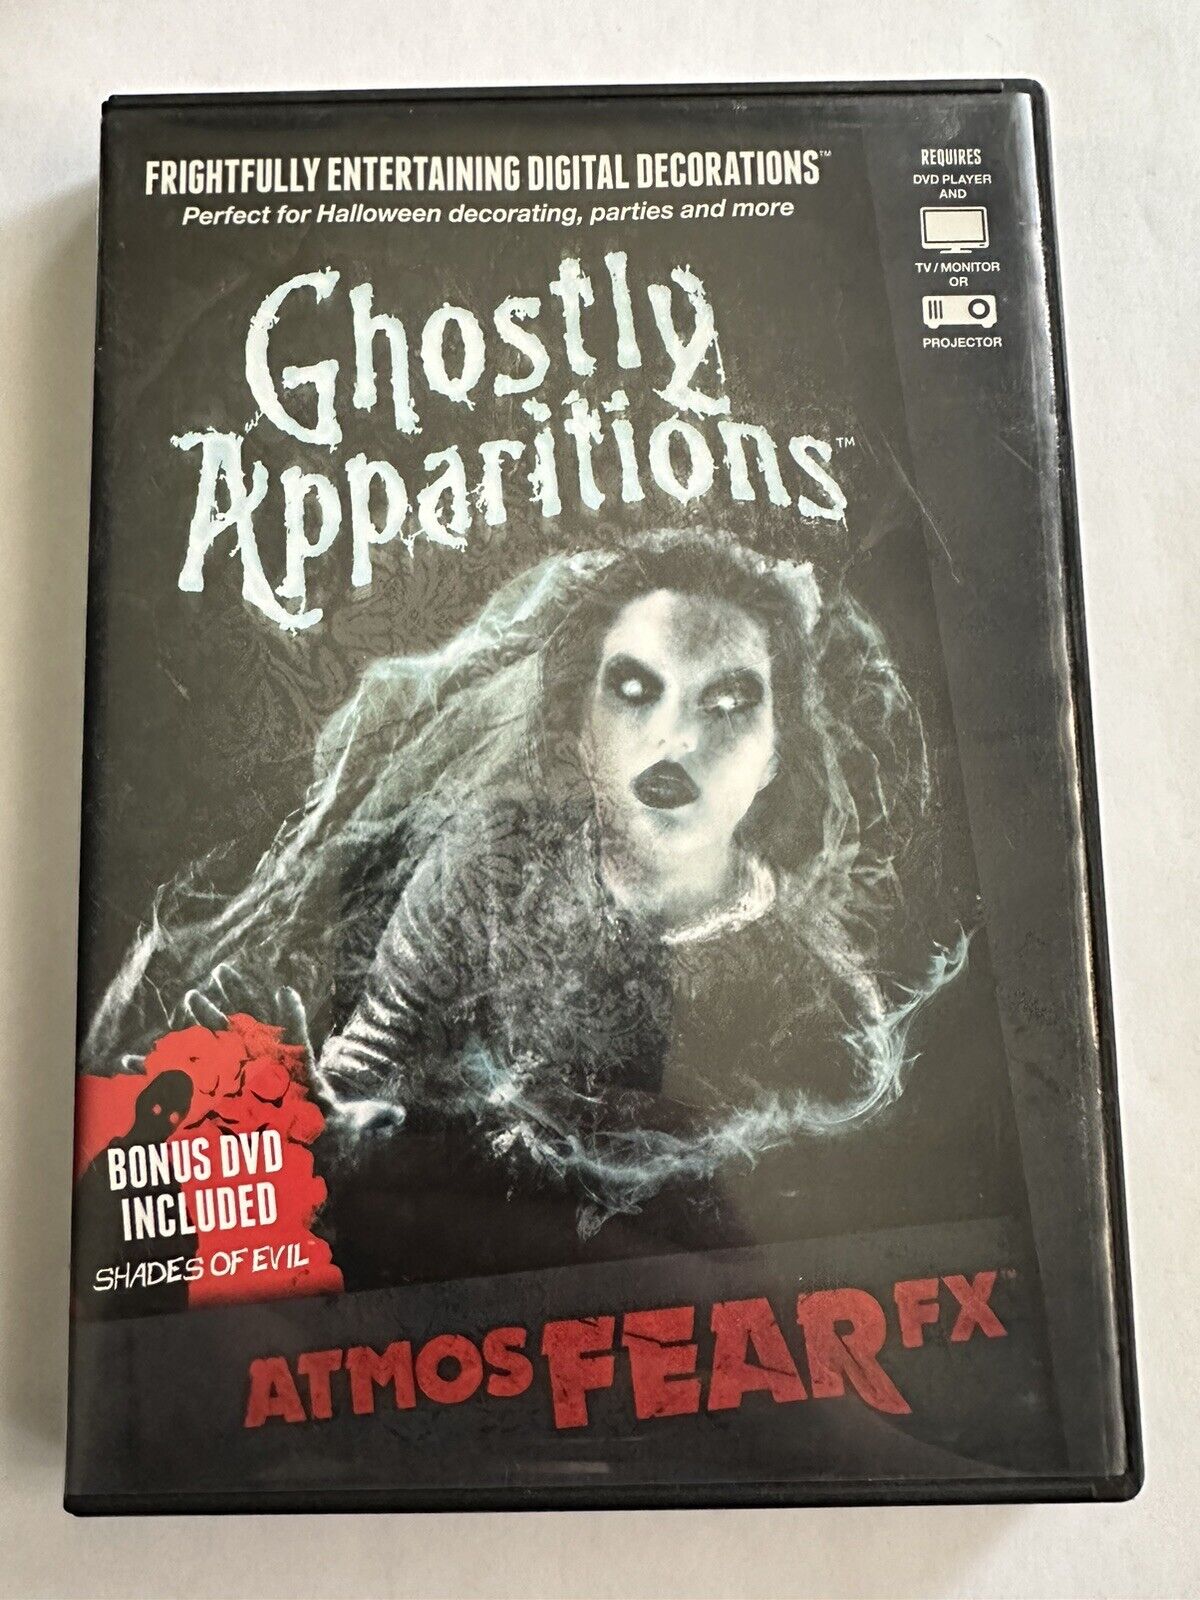 Ghostly Apparitions (DVD) Atmos Fear FX